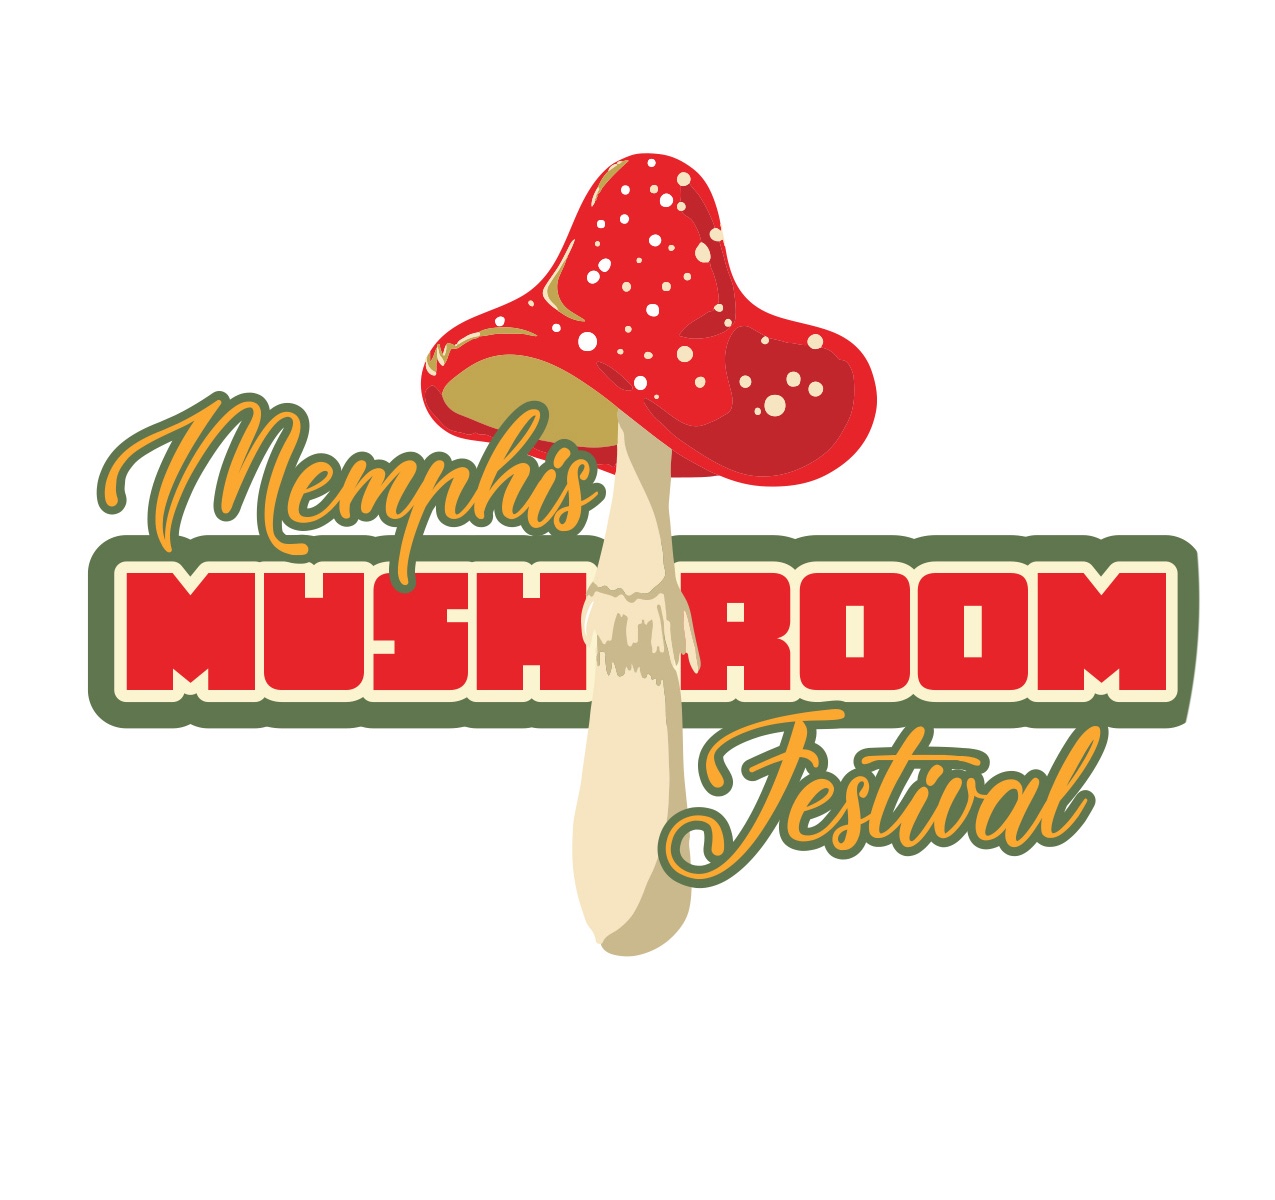 Memphis Mushroom Festival Events